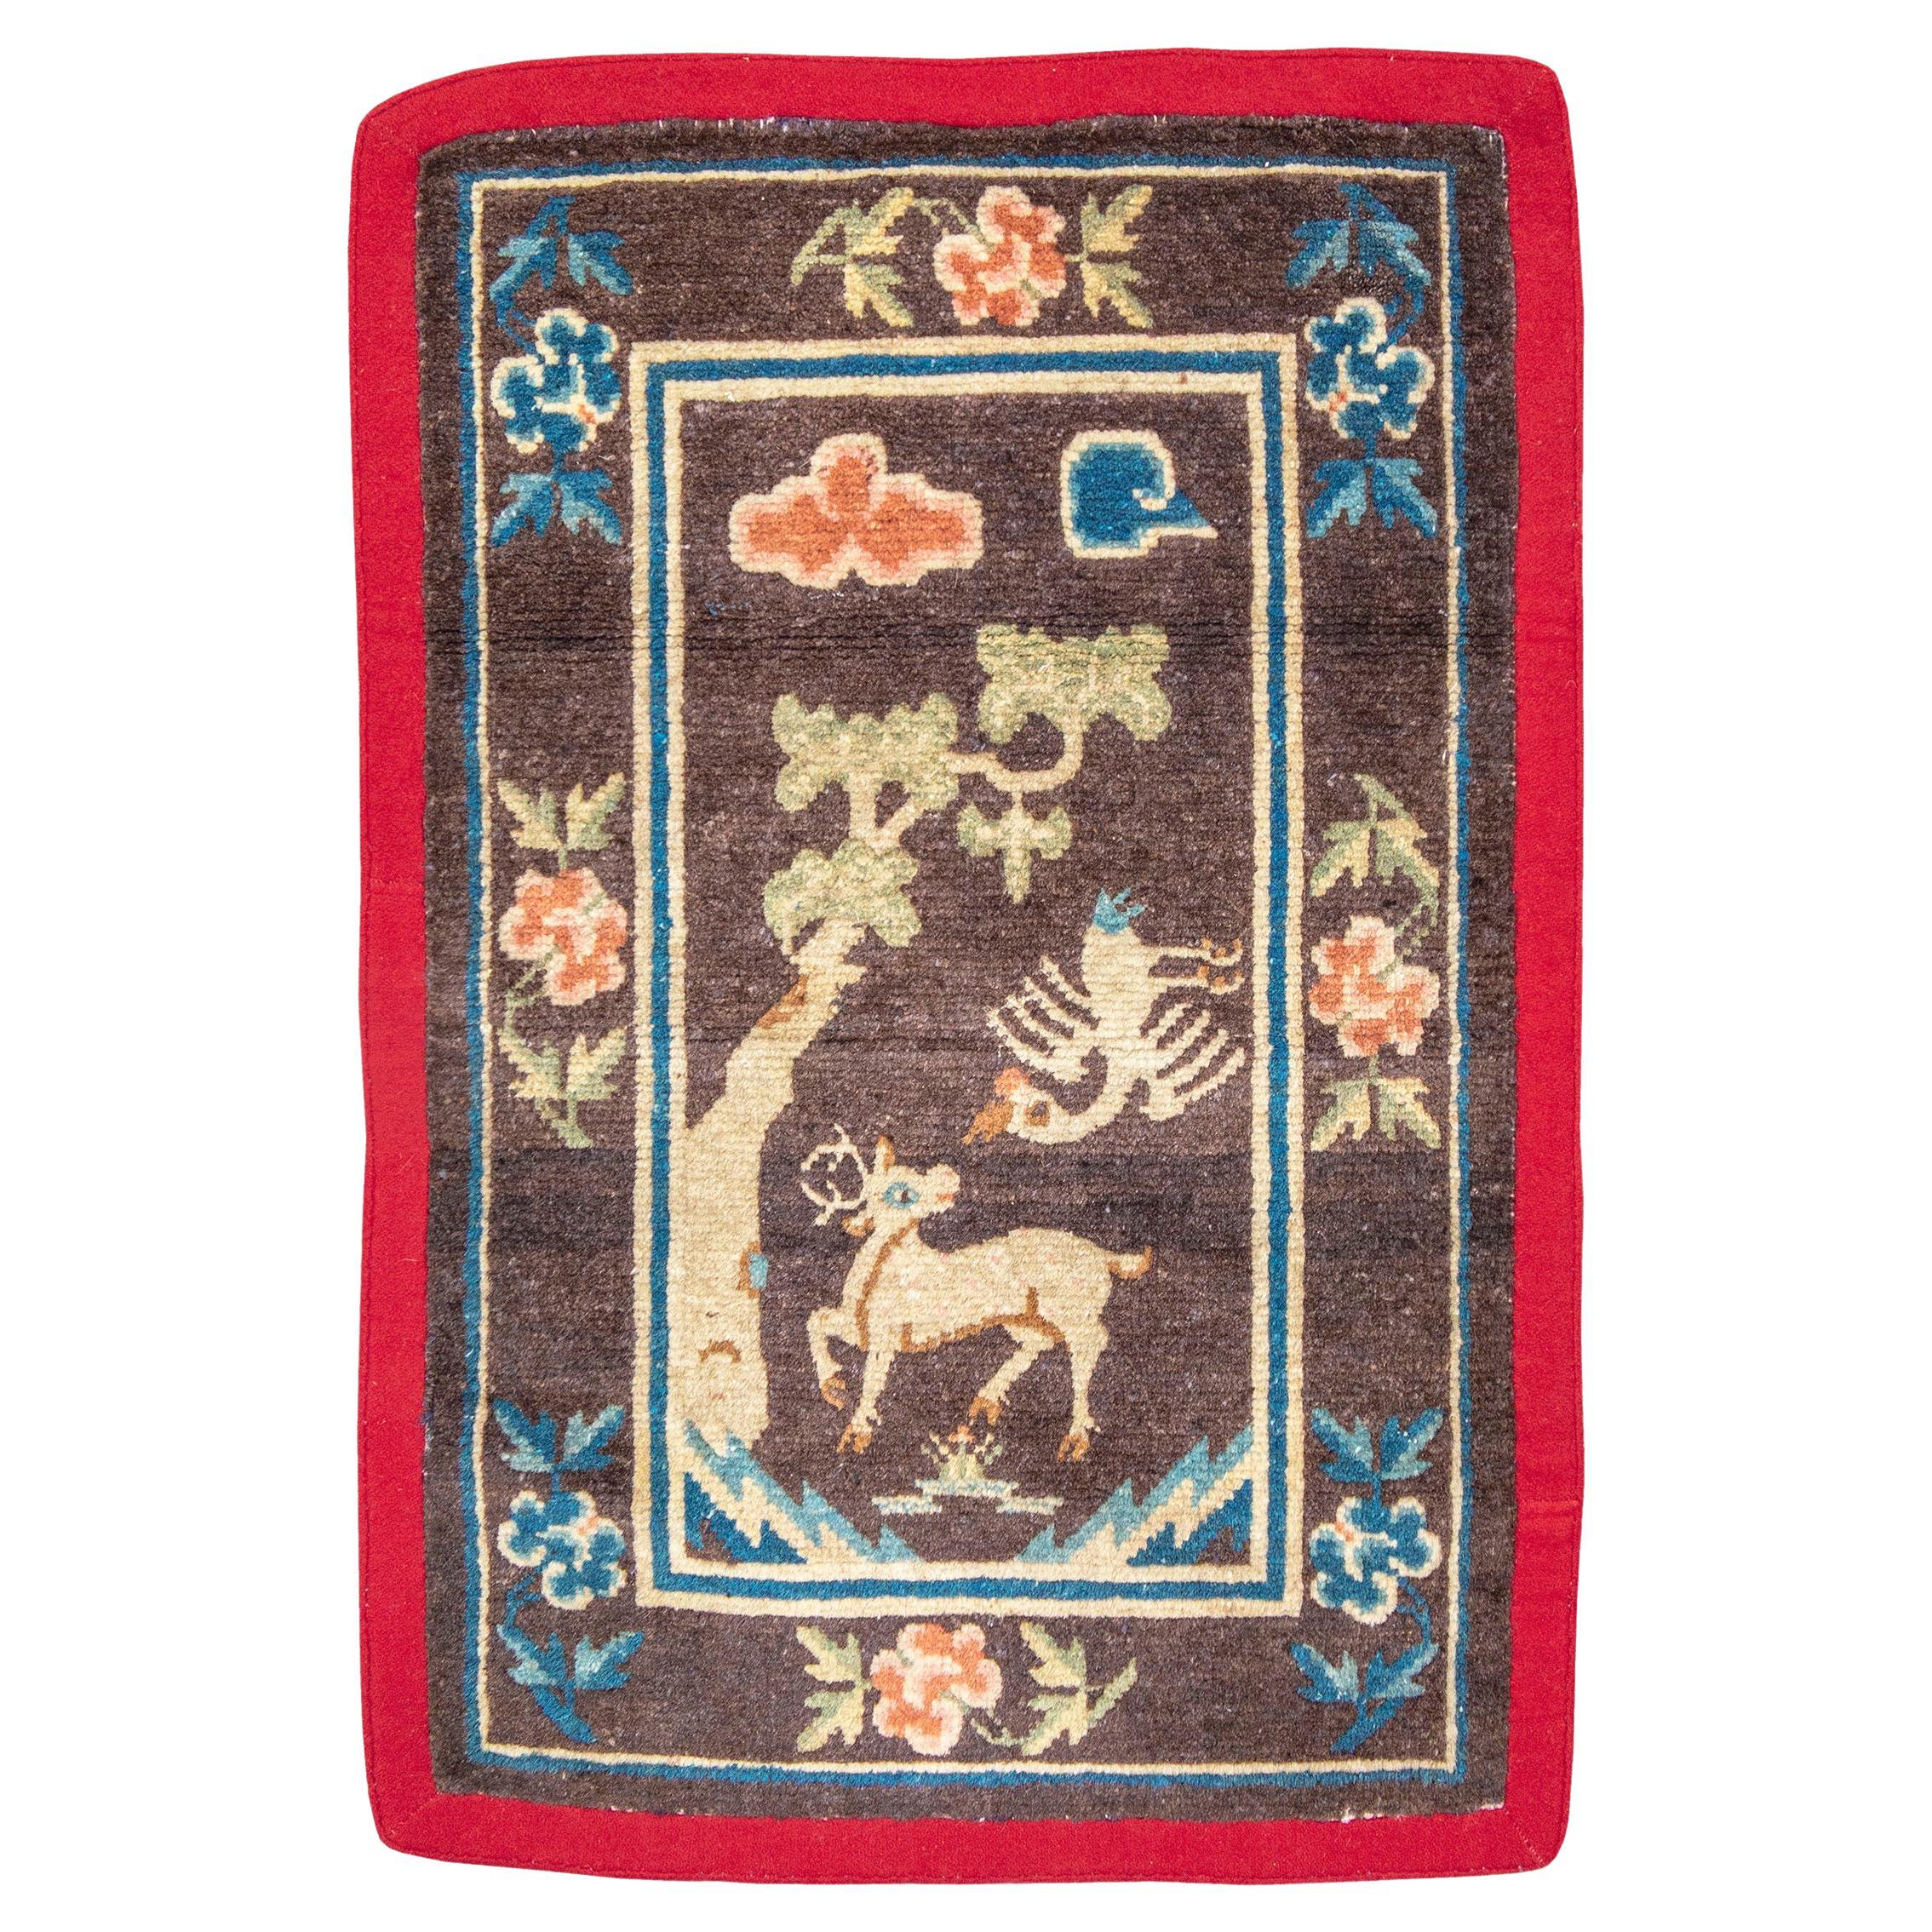 Set of Mongolian Saddle Rugs, Late 19th Century